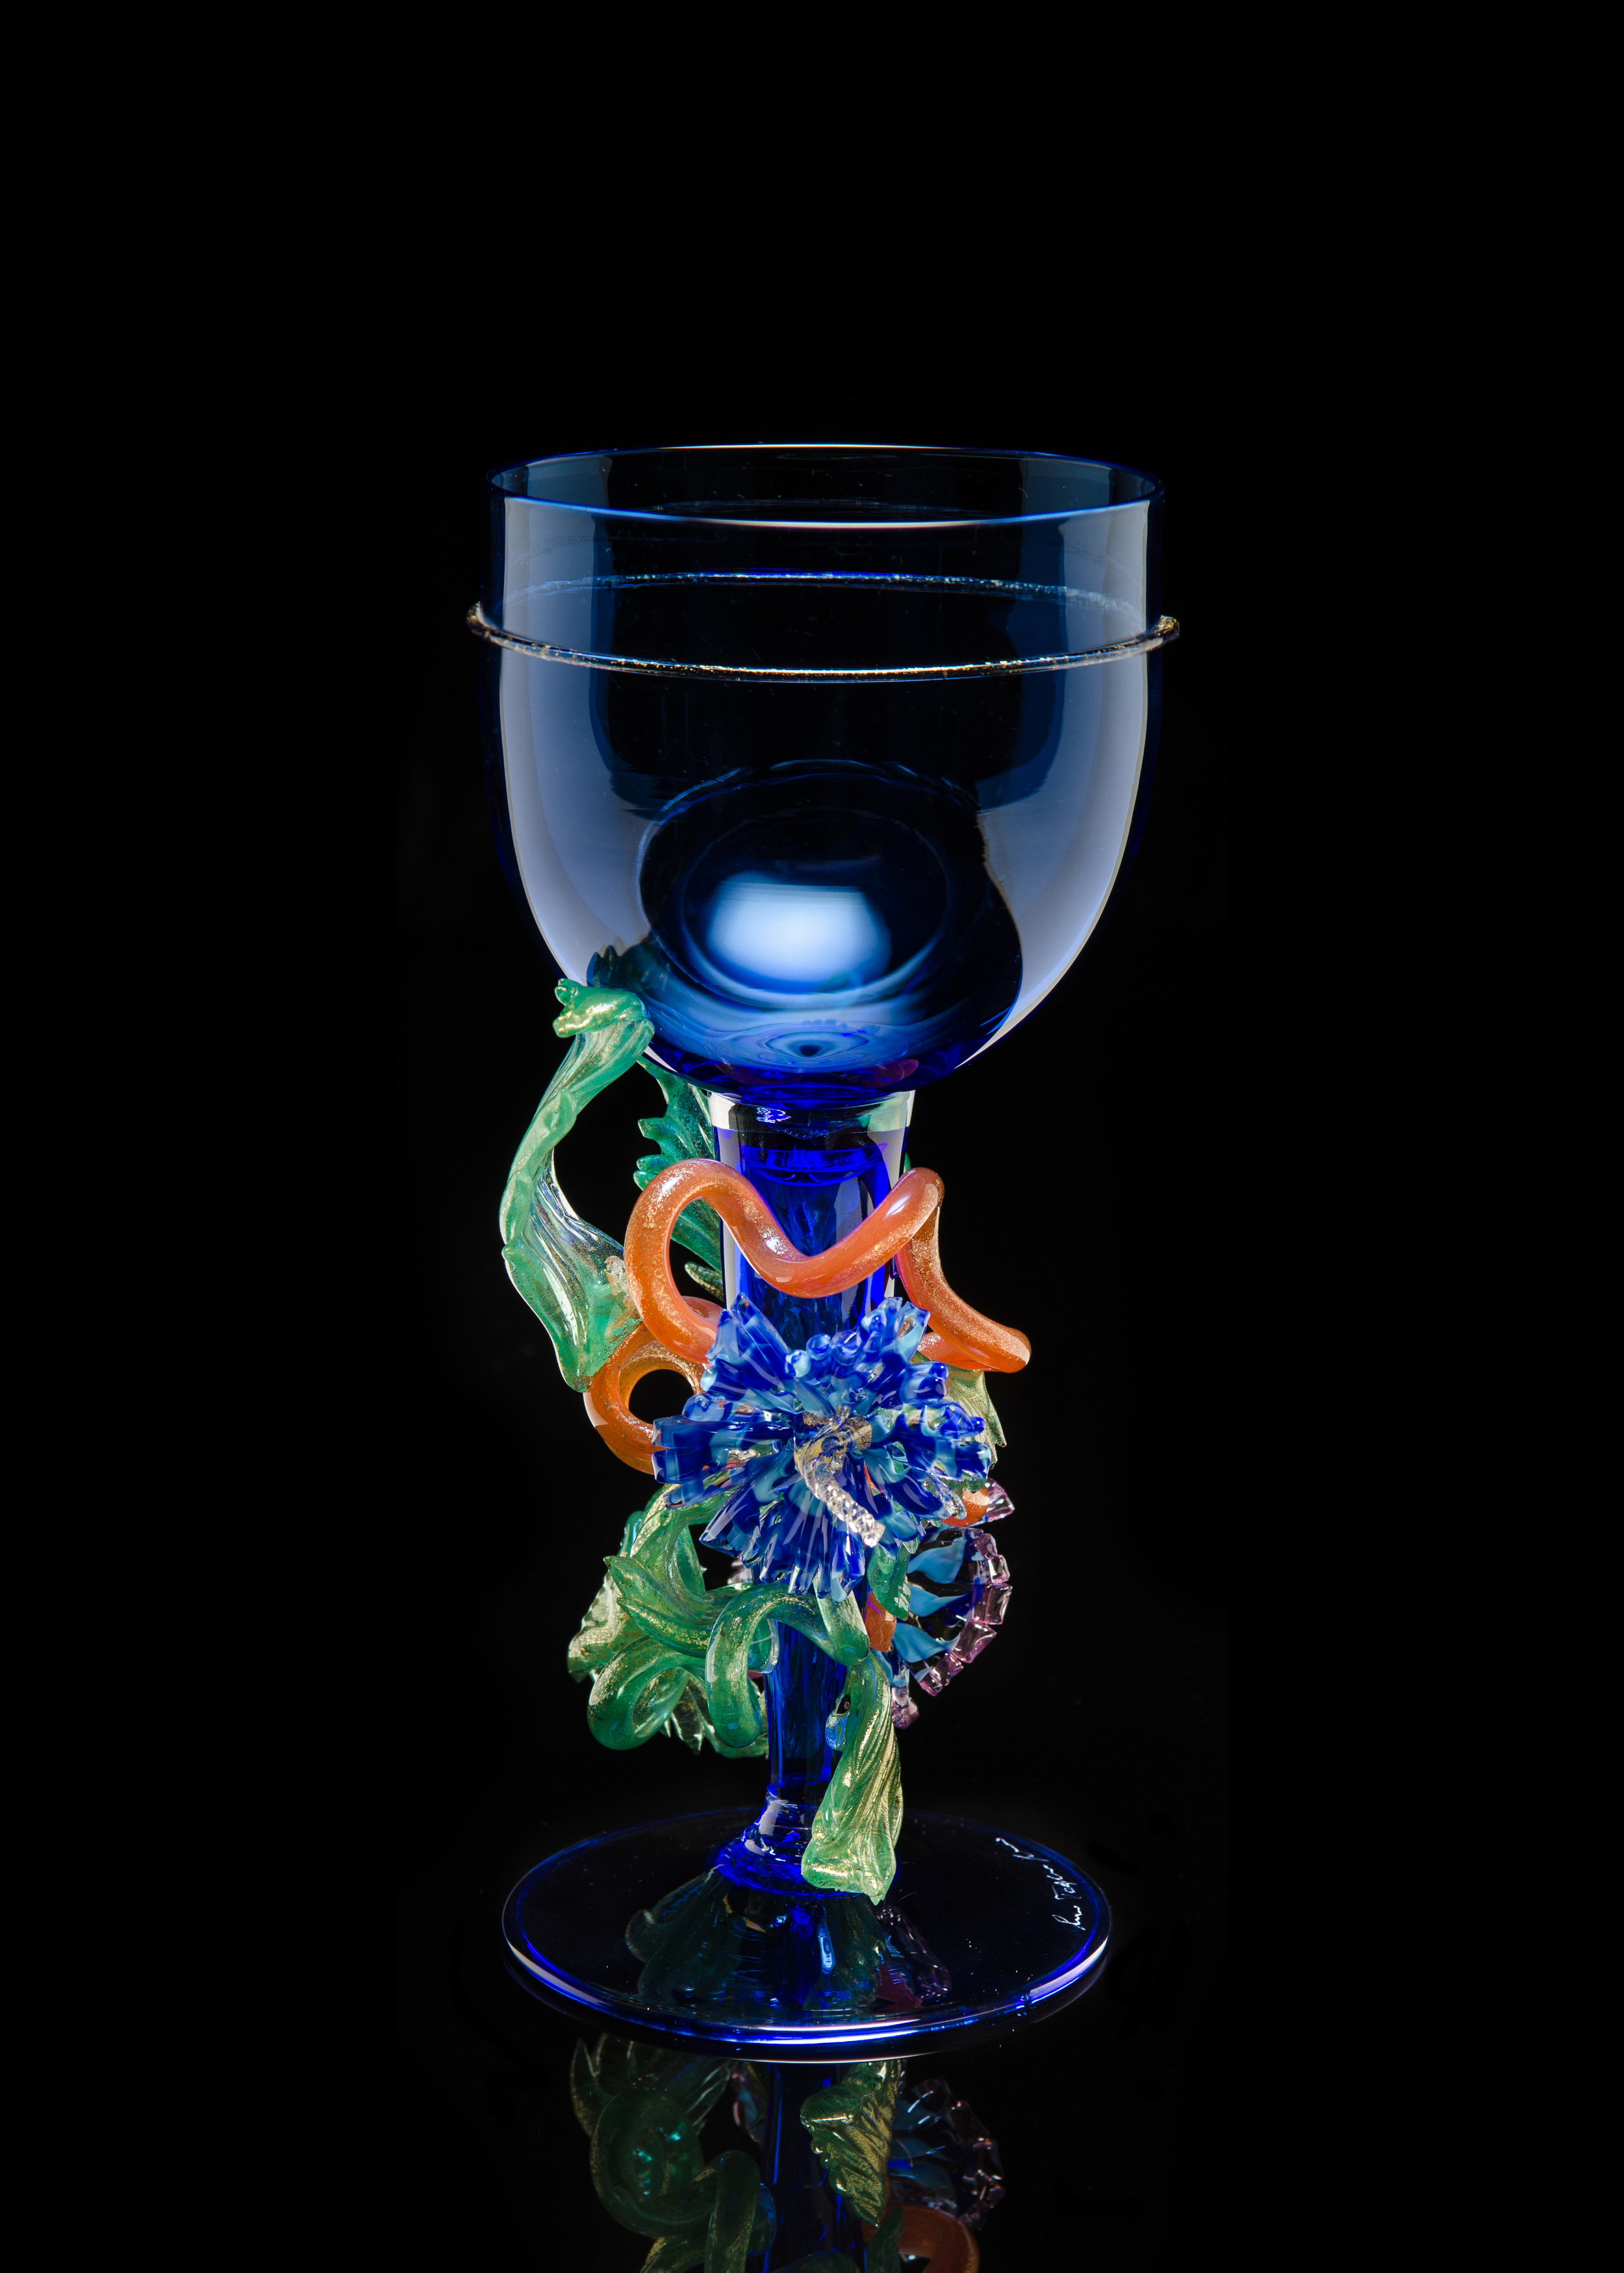  Lino Tagliapietra,&nbsp; Goblet,&nbsp; (1991-1994, glass, 9 1/4 x 4 1/4 x 4 1/4 inches), LT.39 